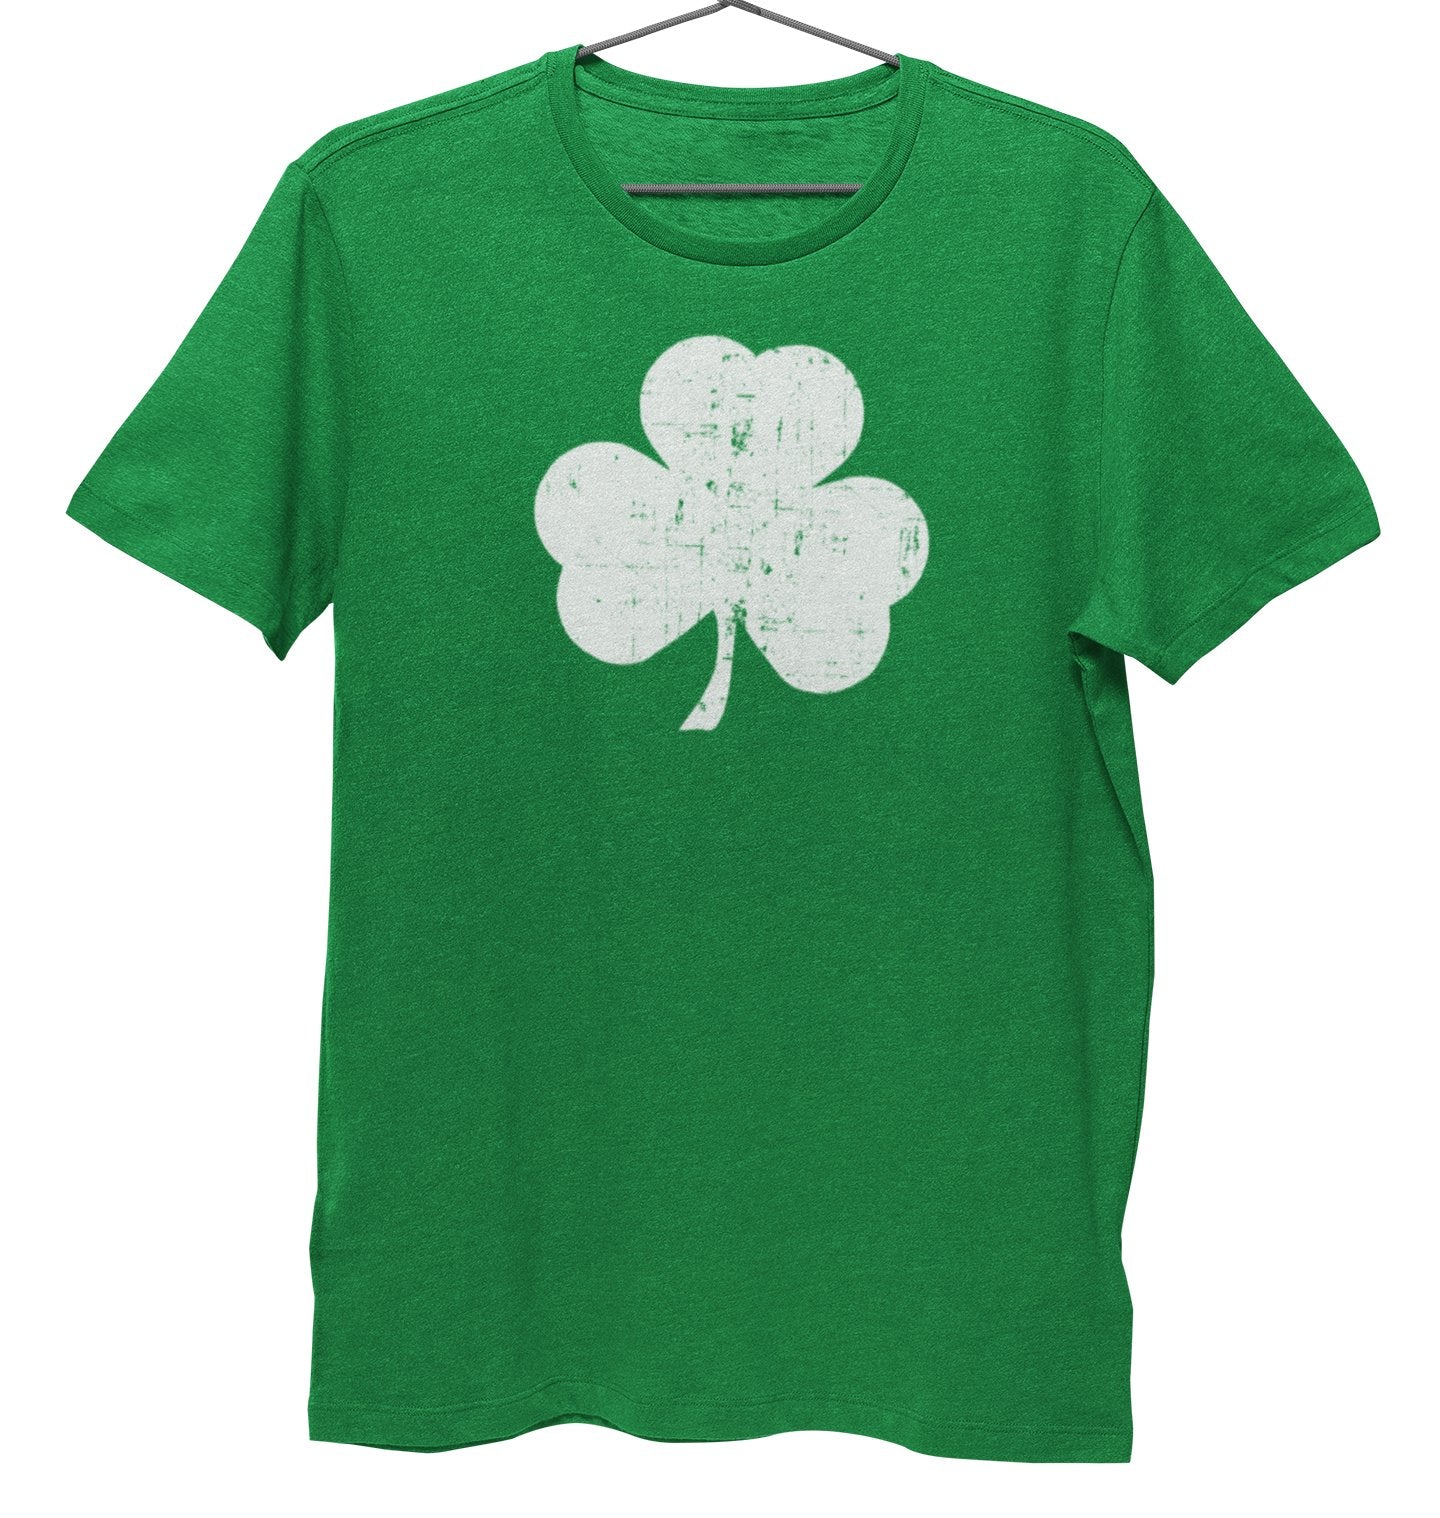 Shamrock Men's T-Shirt (Premium, Distressed Design, Irish green)